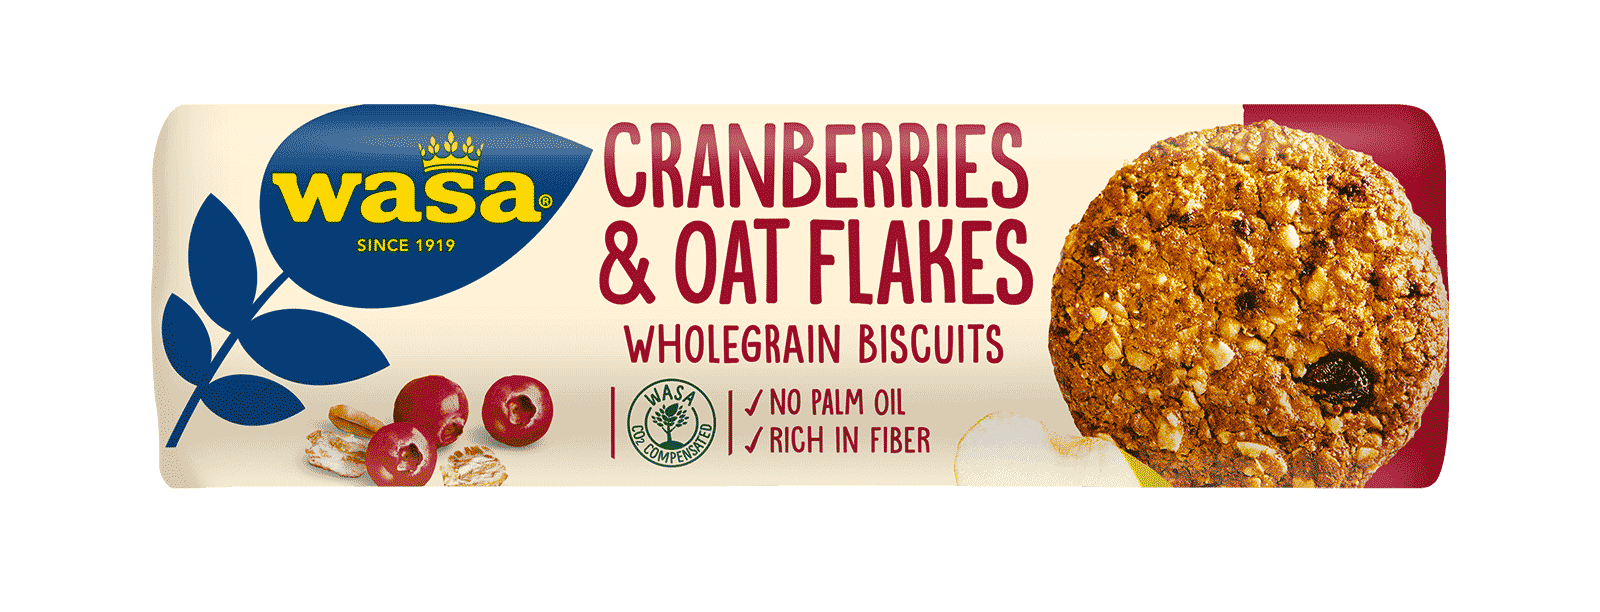 Wasa- Cranberries & Oat Flakes - Koekjes